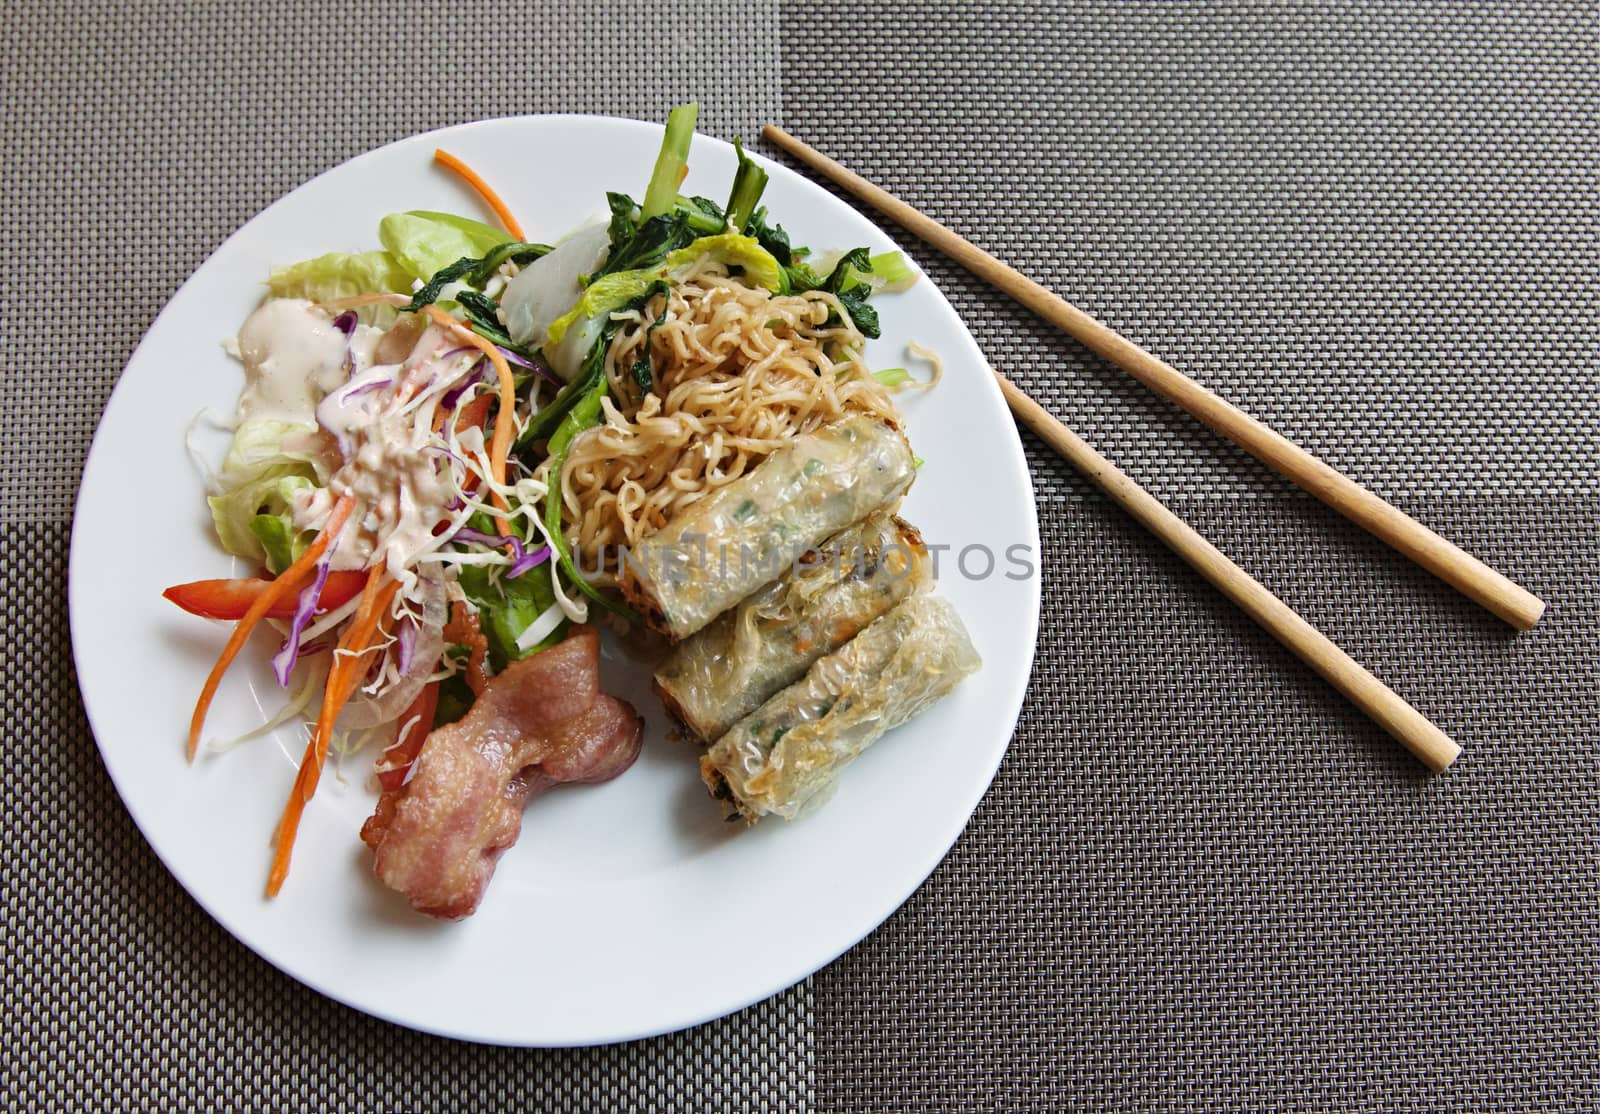 Vietnamese breakfast on a plate with chopsticks